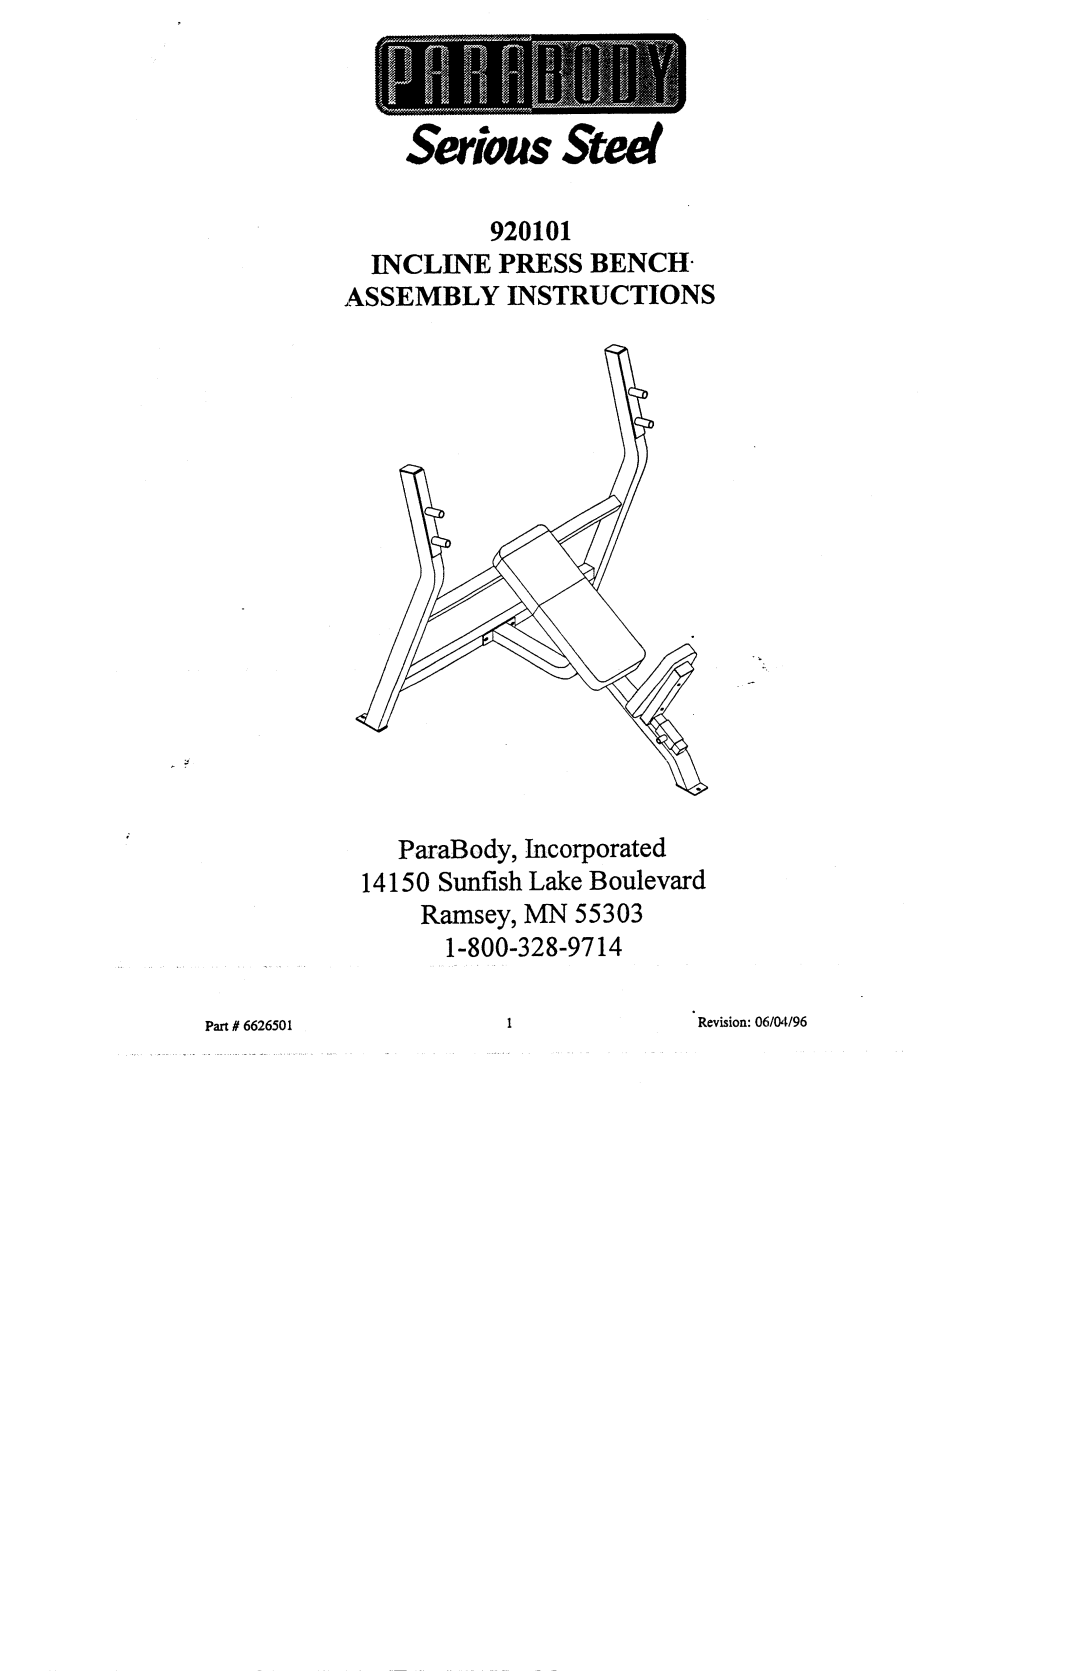 ParaBody 920101 manual Part#, Revision 06/04/96, SeriousSteel, Incline Press Bench, Sunfish Lake Boulevard Ramsey, MN55303 